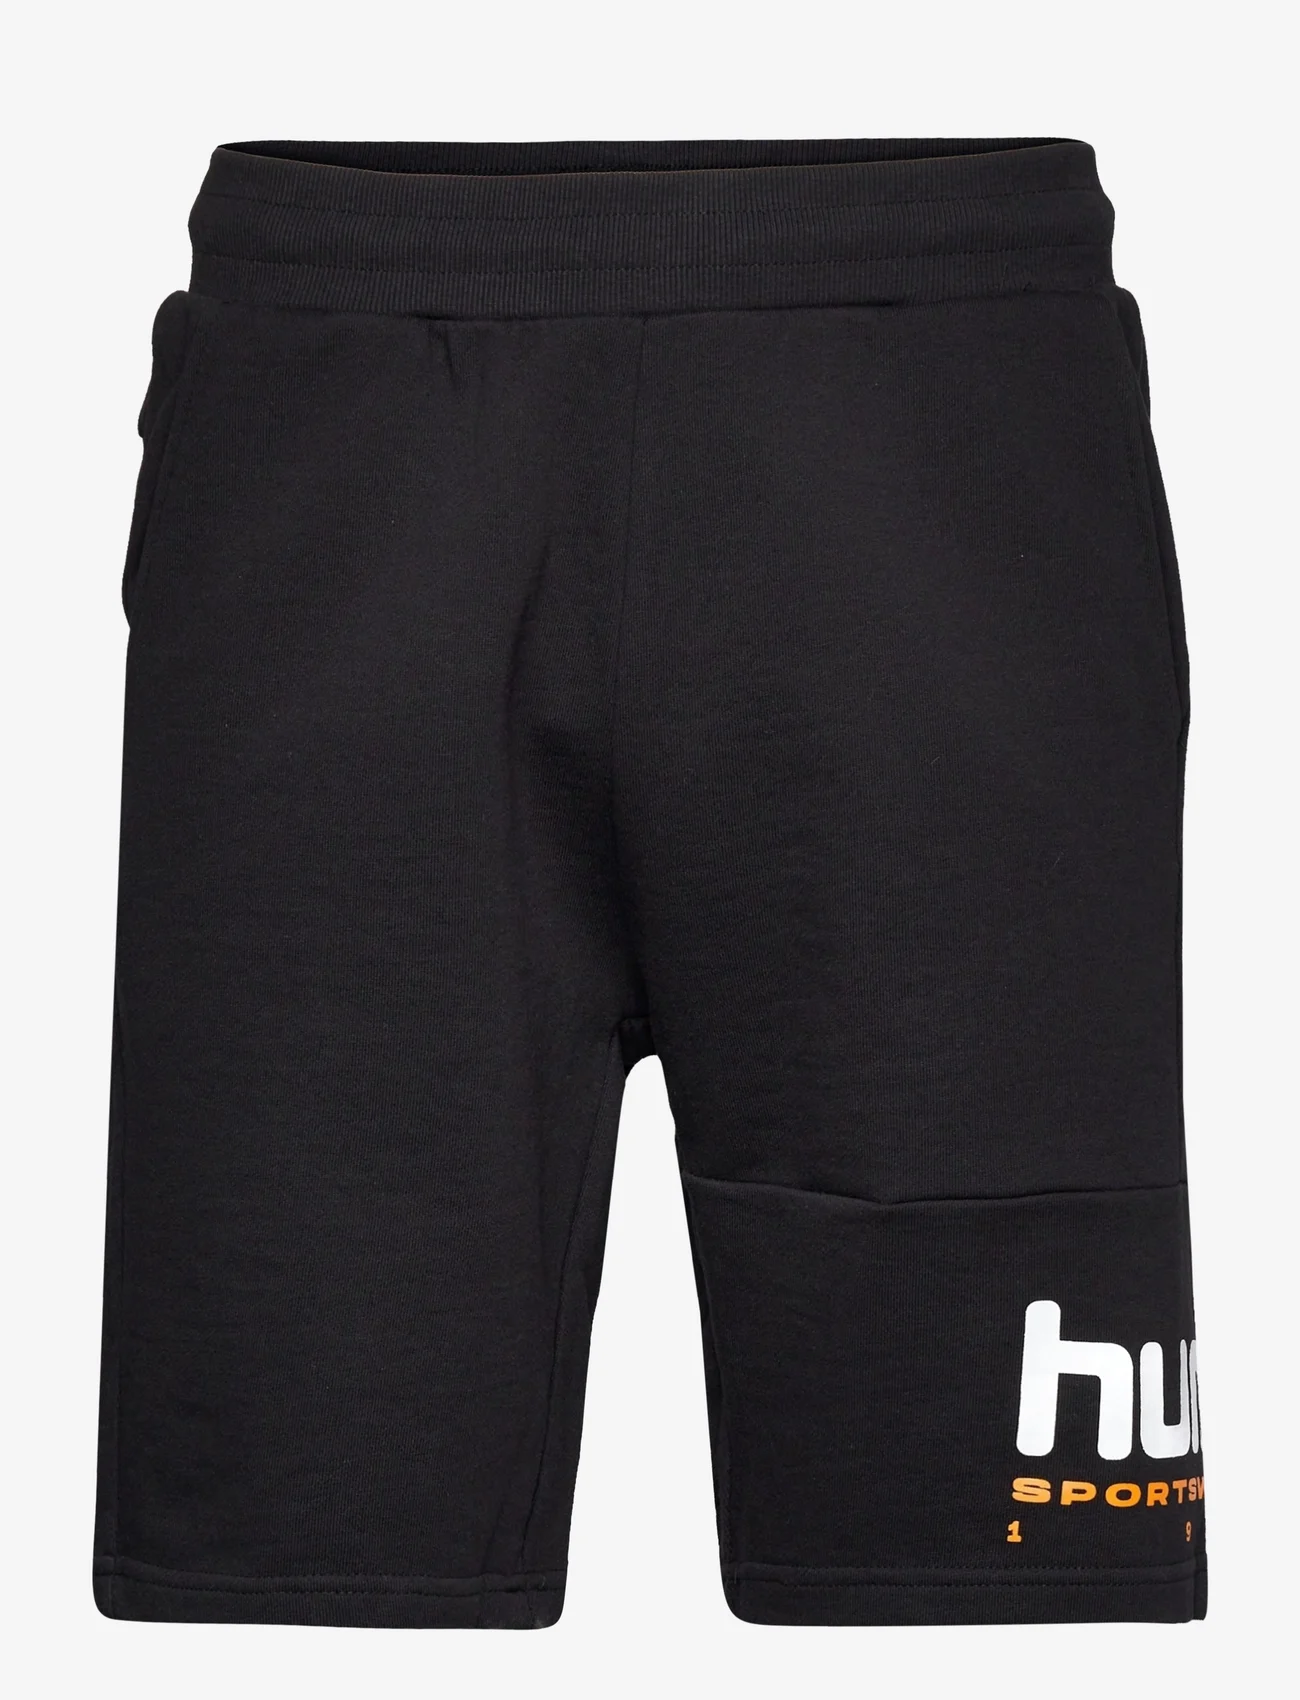 Hummel - hmlLGC MANFRED SHORTS - sweat shorts - black - 0